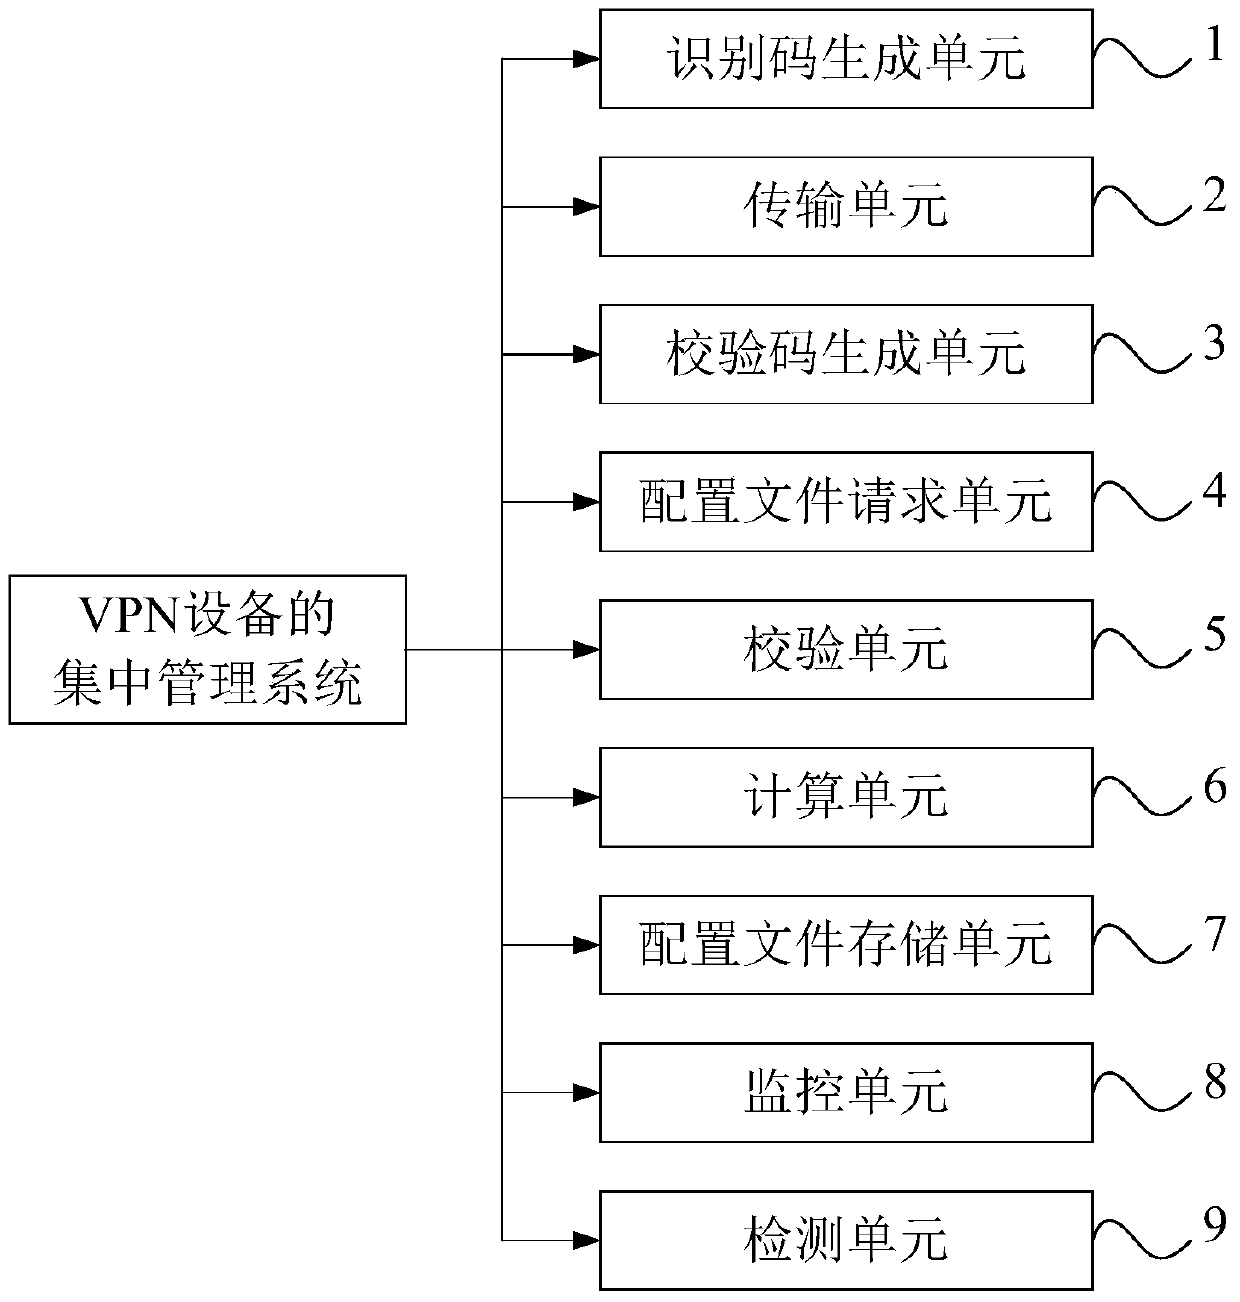 Centralized management system and method for vpn equipment